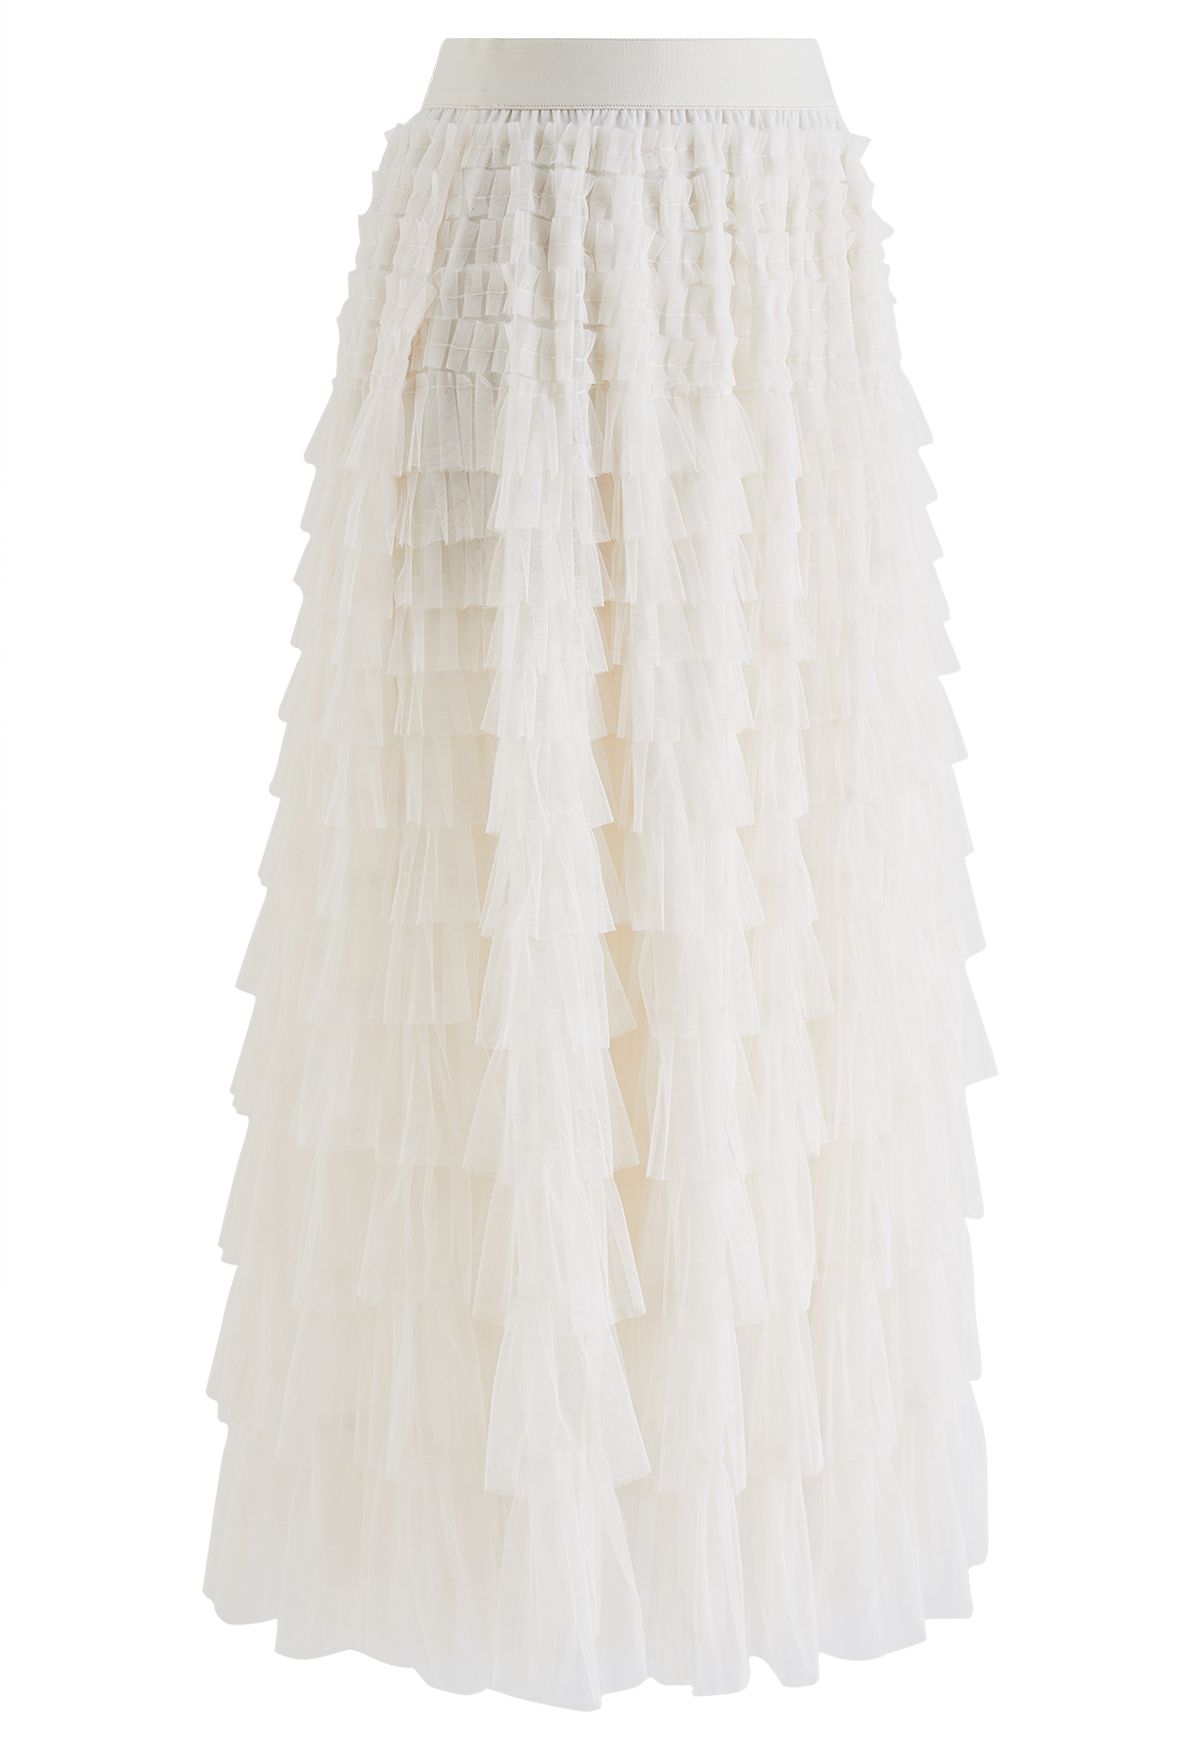 Swan Cloud Midi Skirt in Cream - Retro, Indie and Unique Fashion